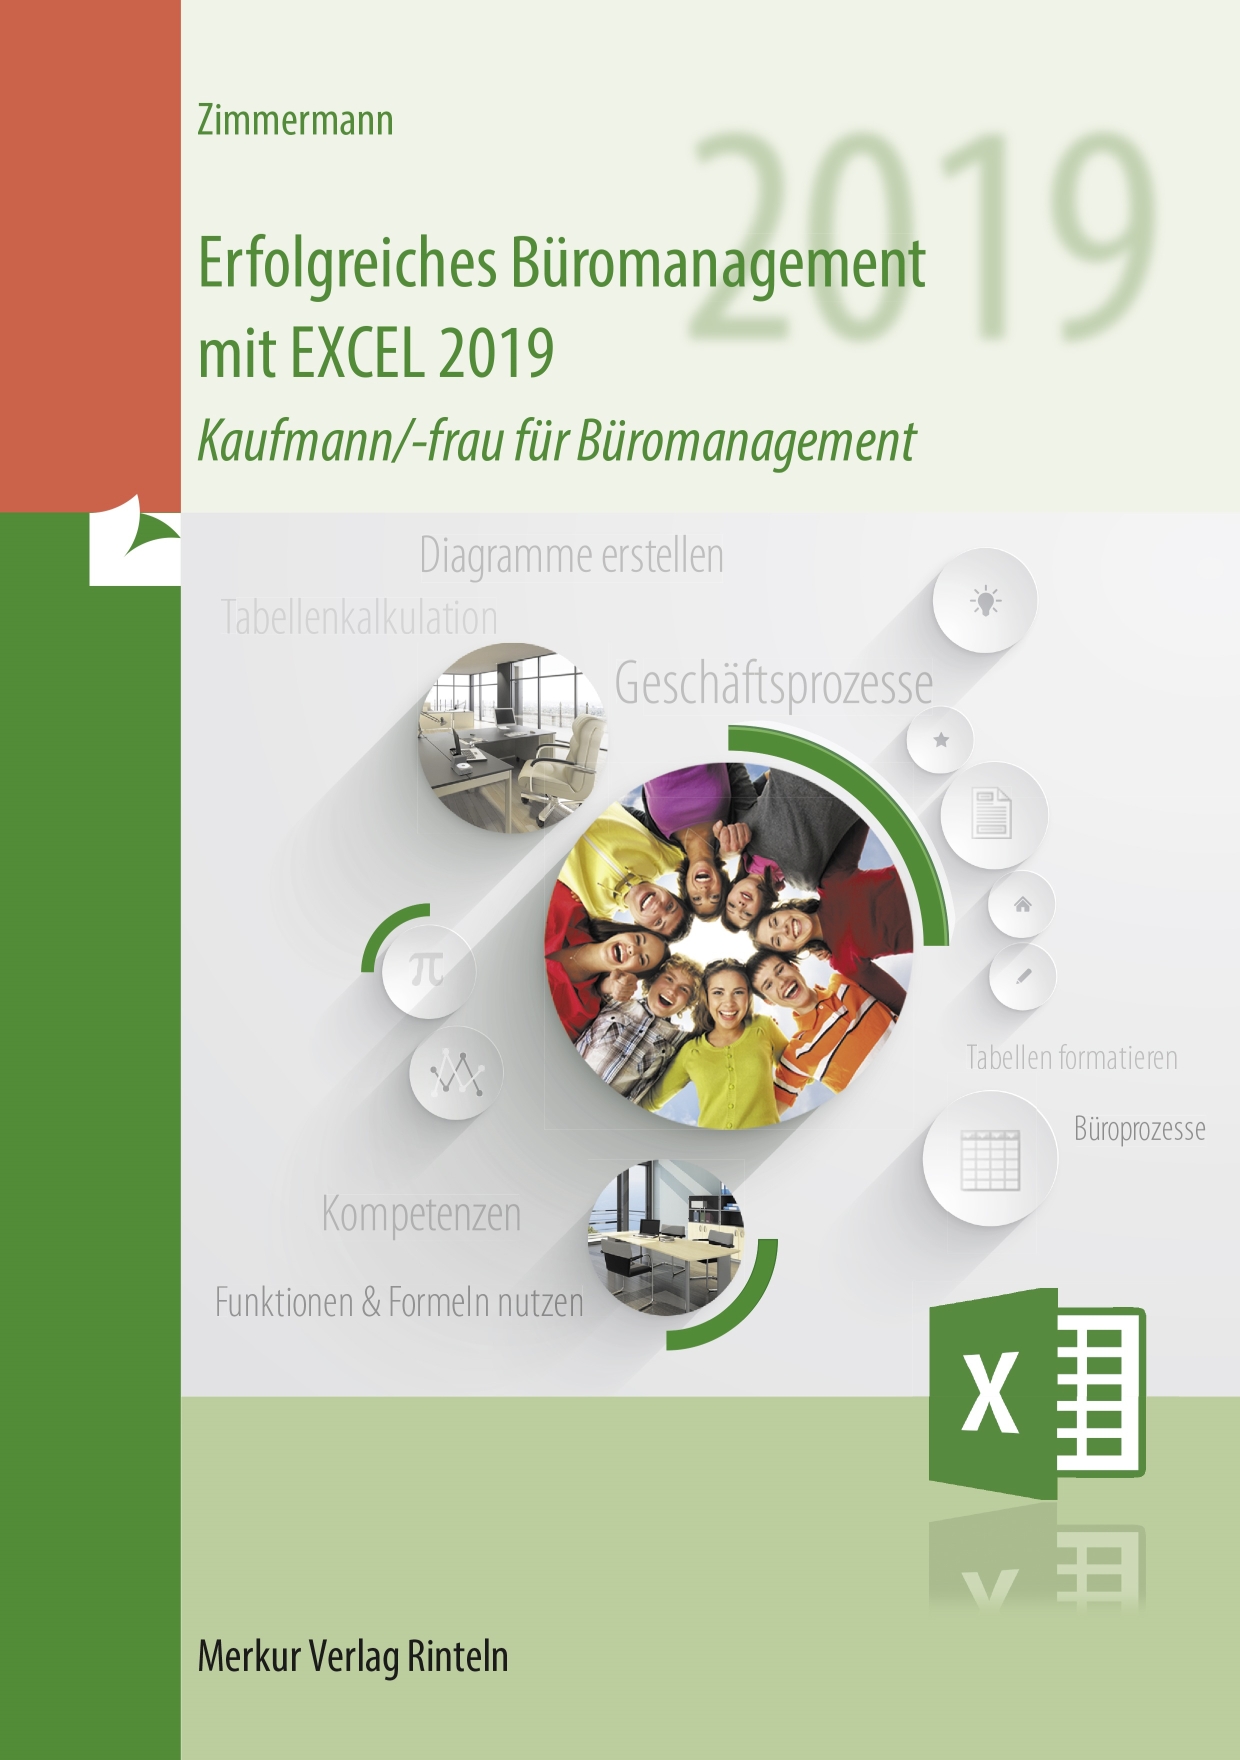 Erfolgreiches Büromanagement EXCEL 2019 Kaufmann/-frau für Büromanagement